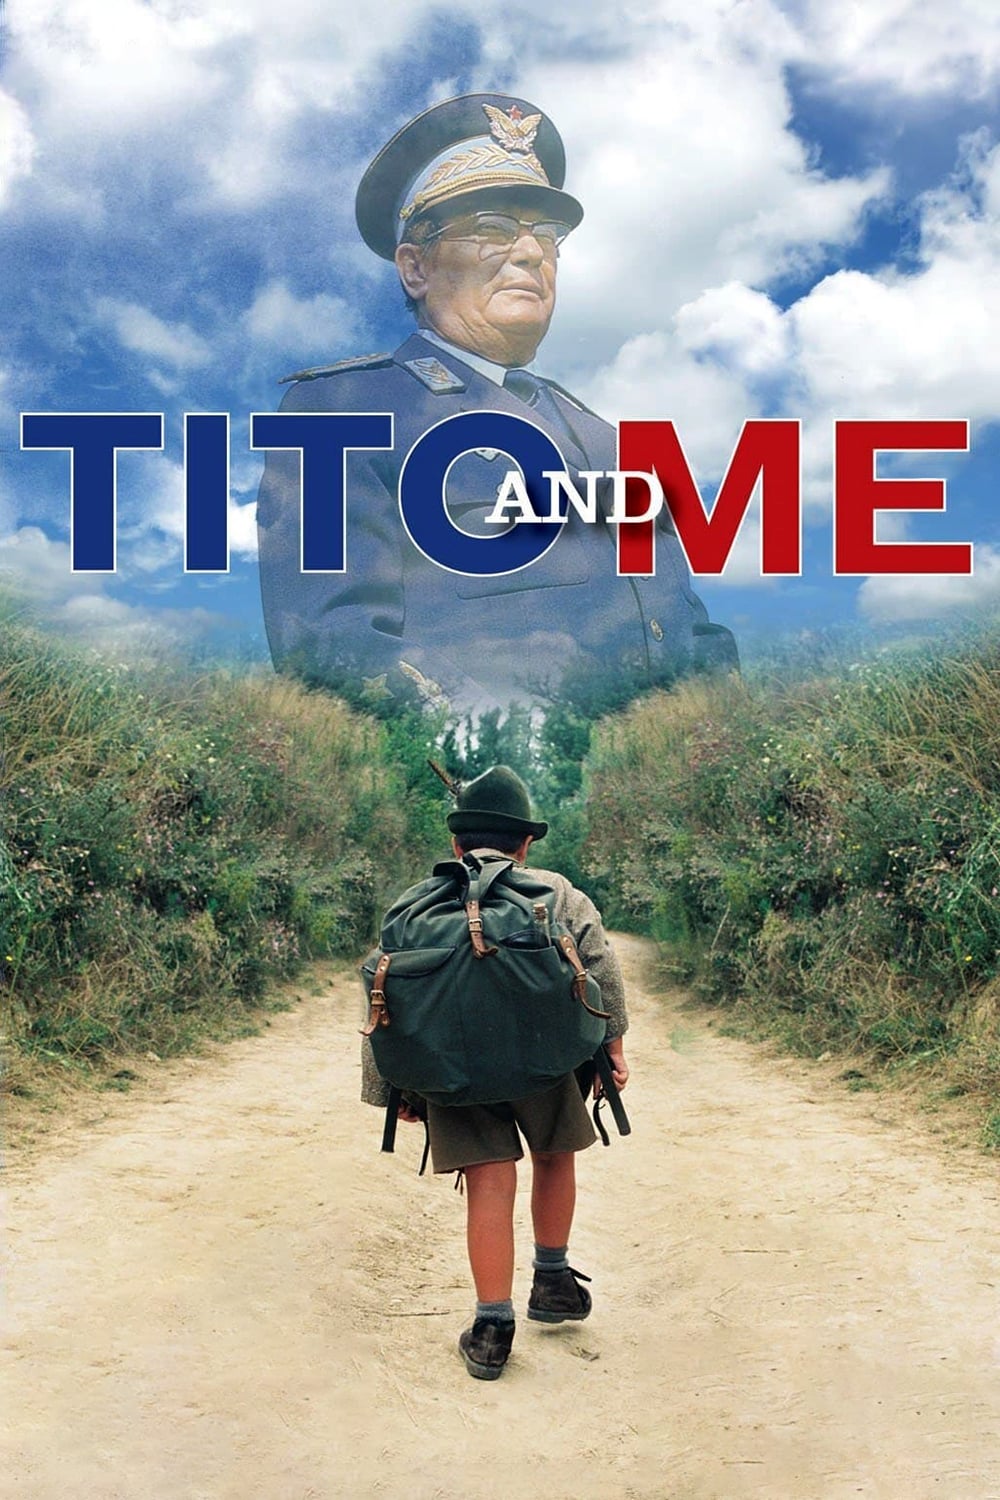 Tito and Me (1992)